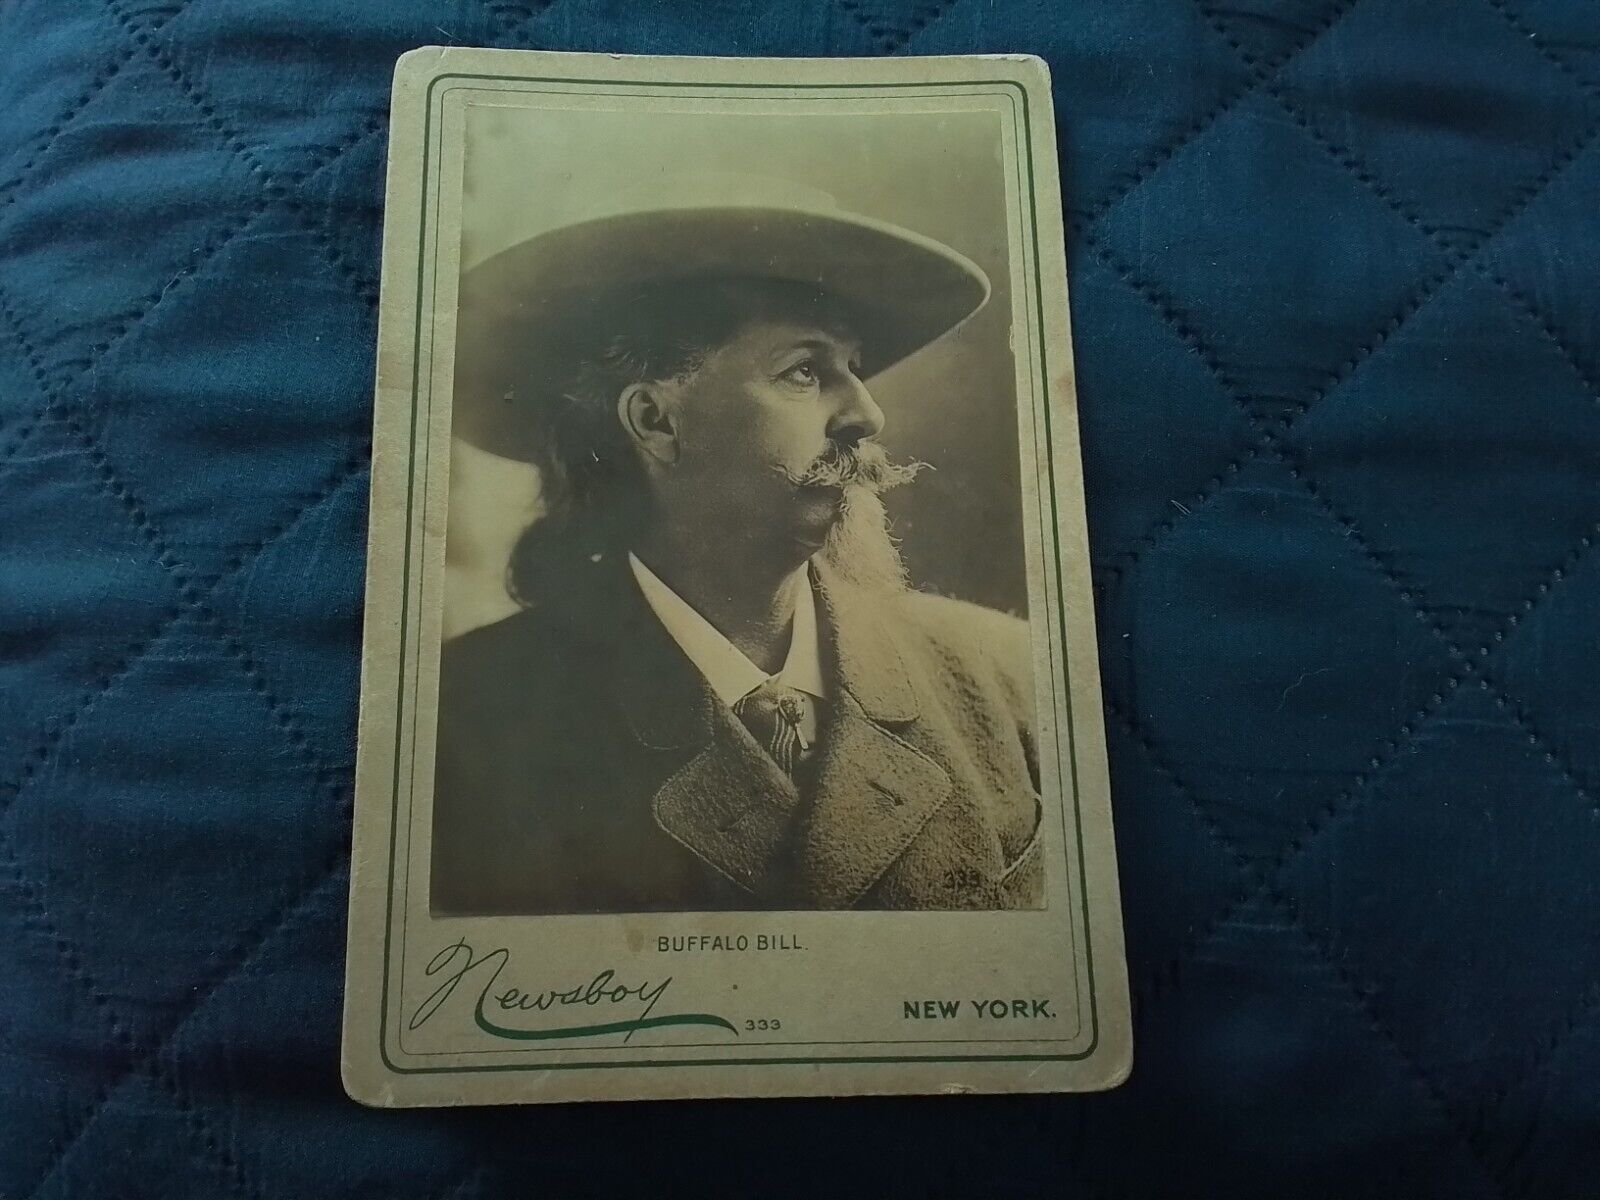 Historic Buffalo Bill Cody cabinet card by newsboy